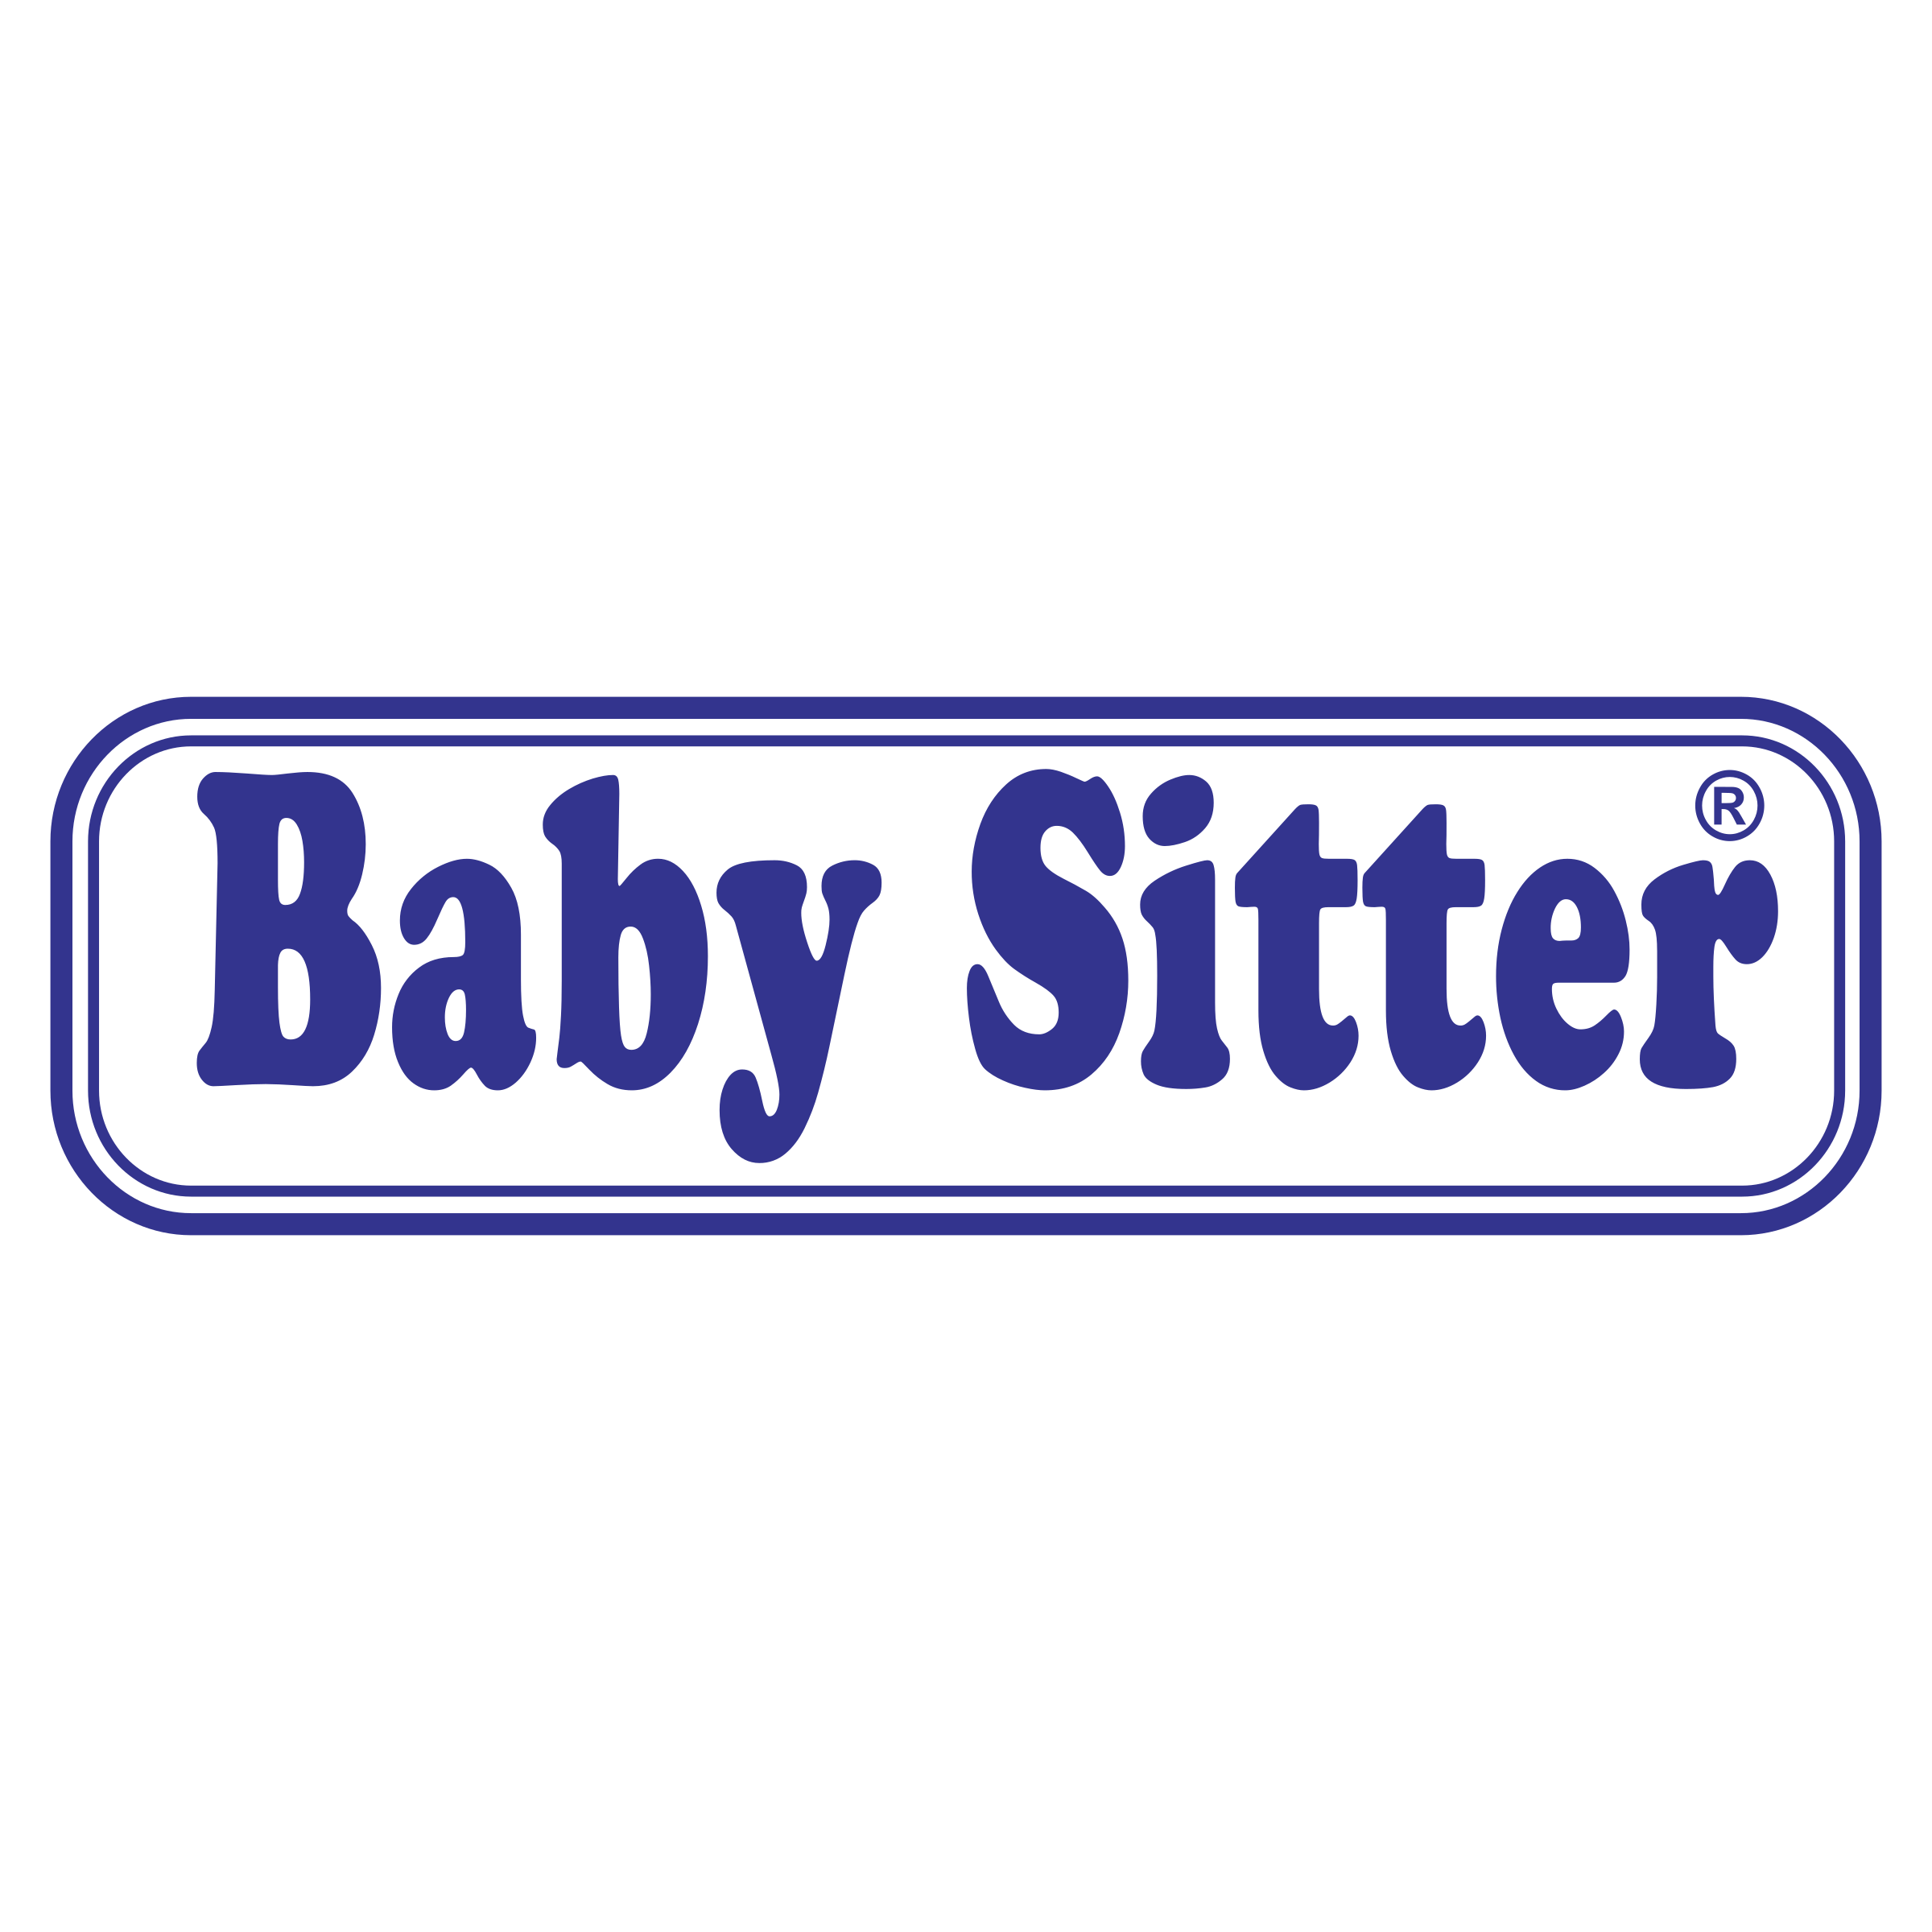 Sitter Logo - Baby Sitter Logo PNG Transparent & SVG Vector - Freebie Supply